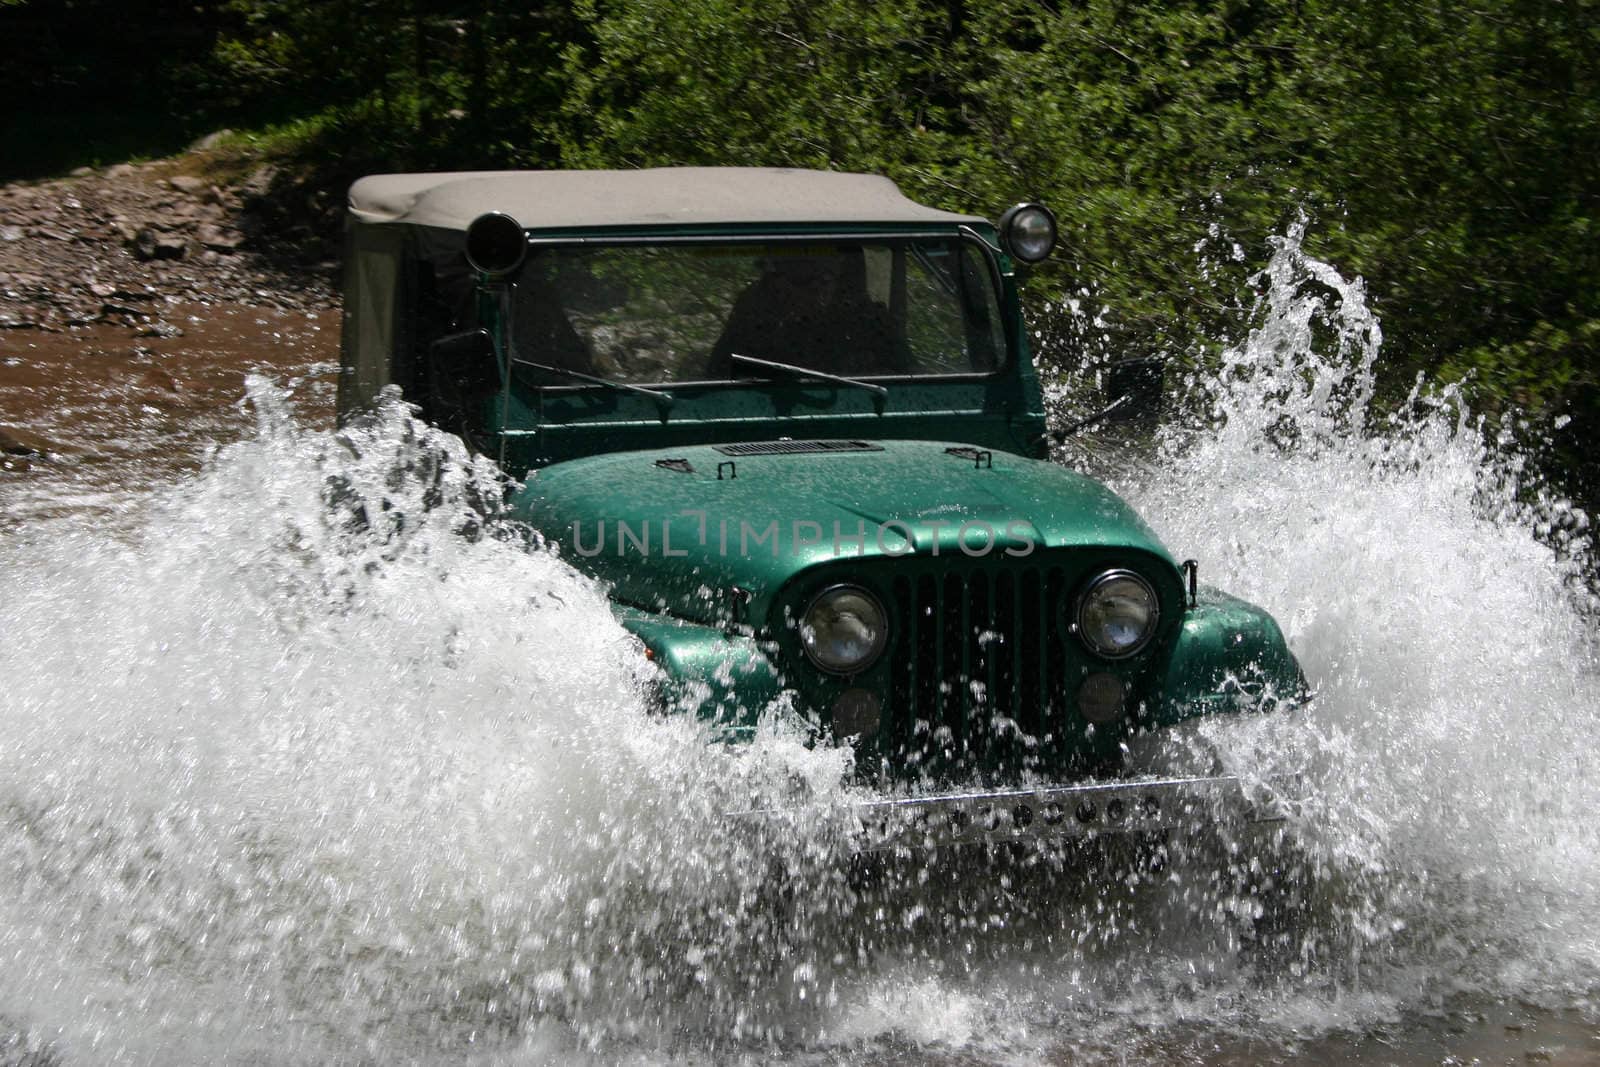 Popular four-wheel-drive vehicle plows through mountain stream creating large spray of water